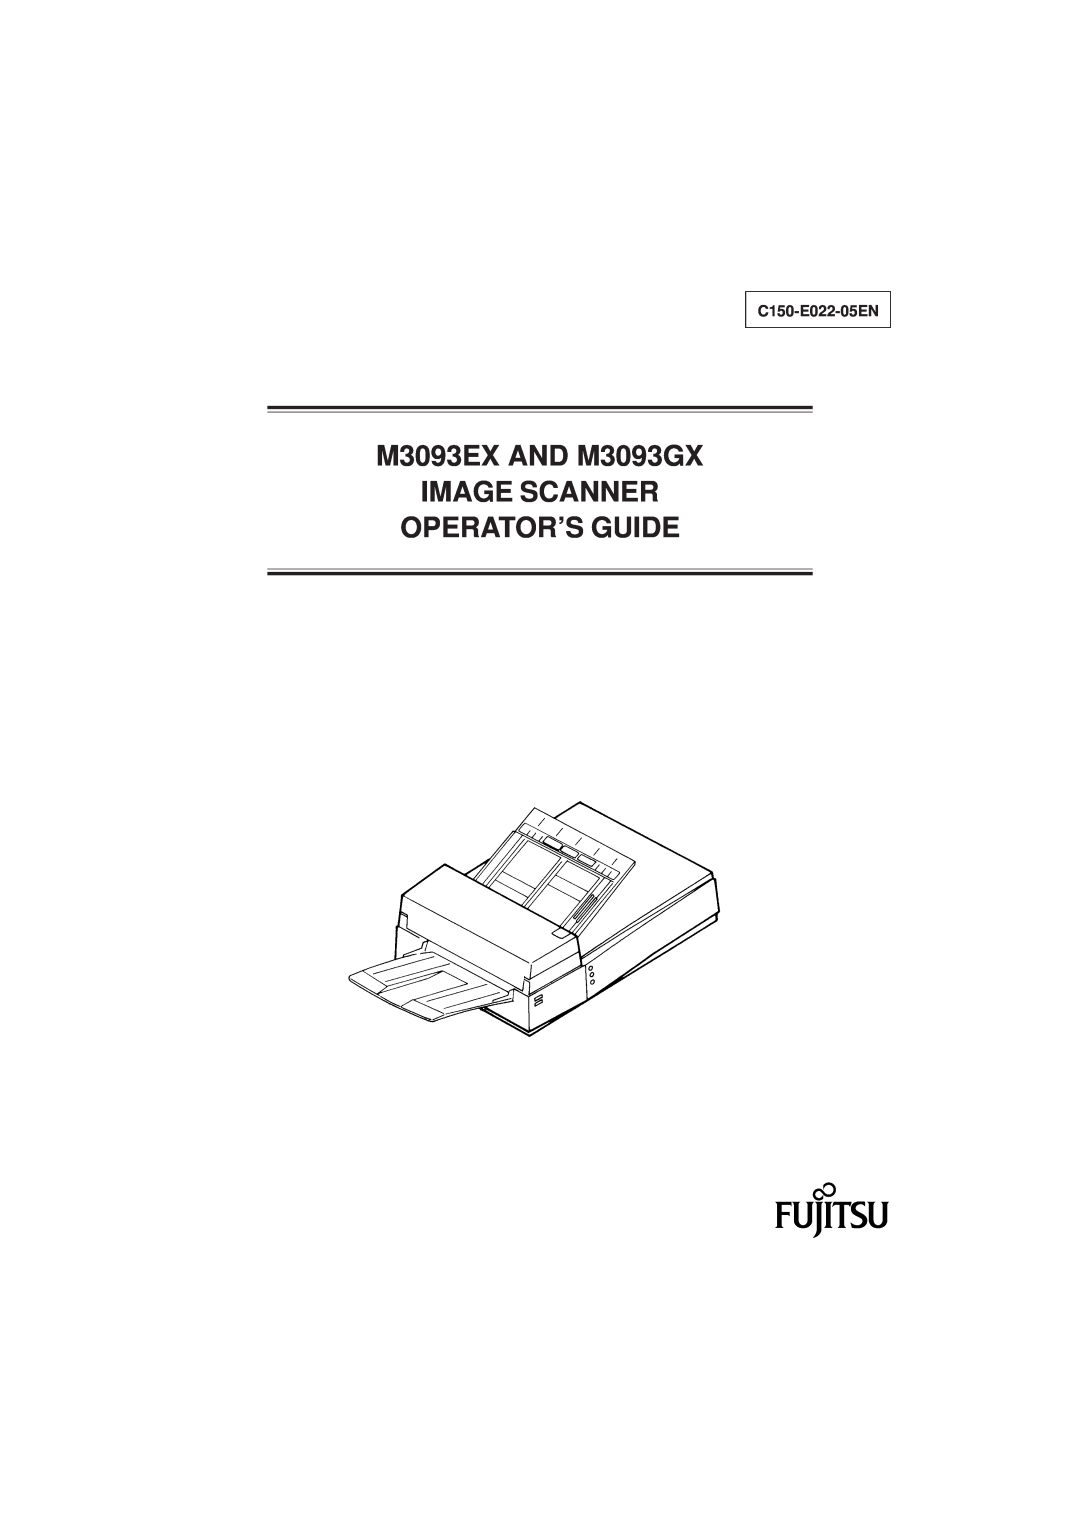 Fujitsu manual M3093EX AND M3093GX IMAGE SCANNER OPERATOR’S GUIDE, C150-E022-05EN 